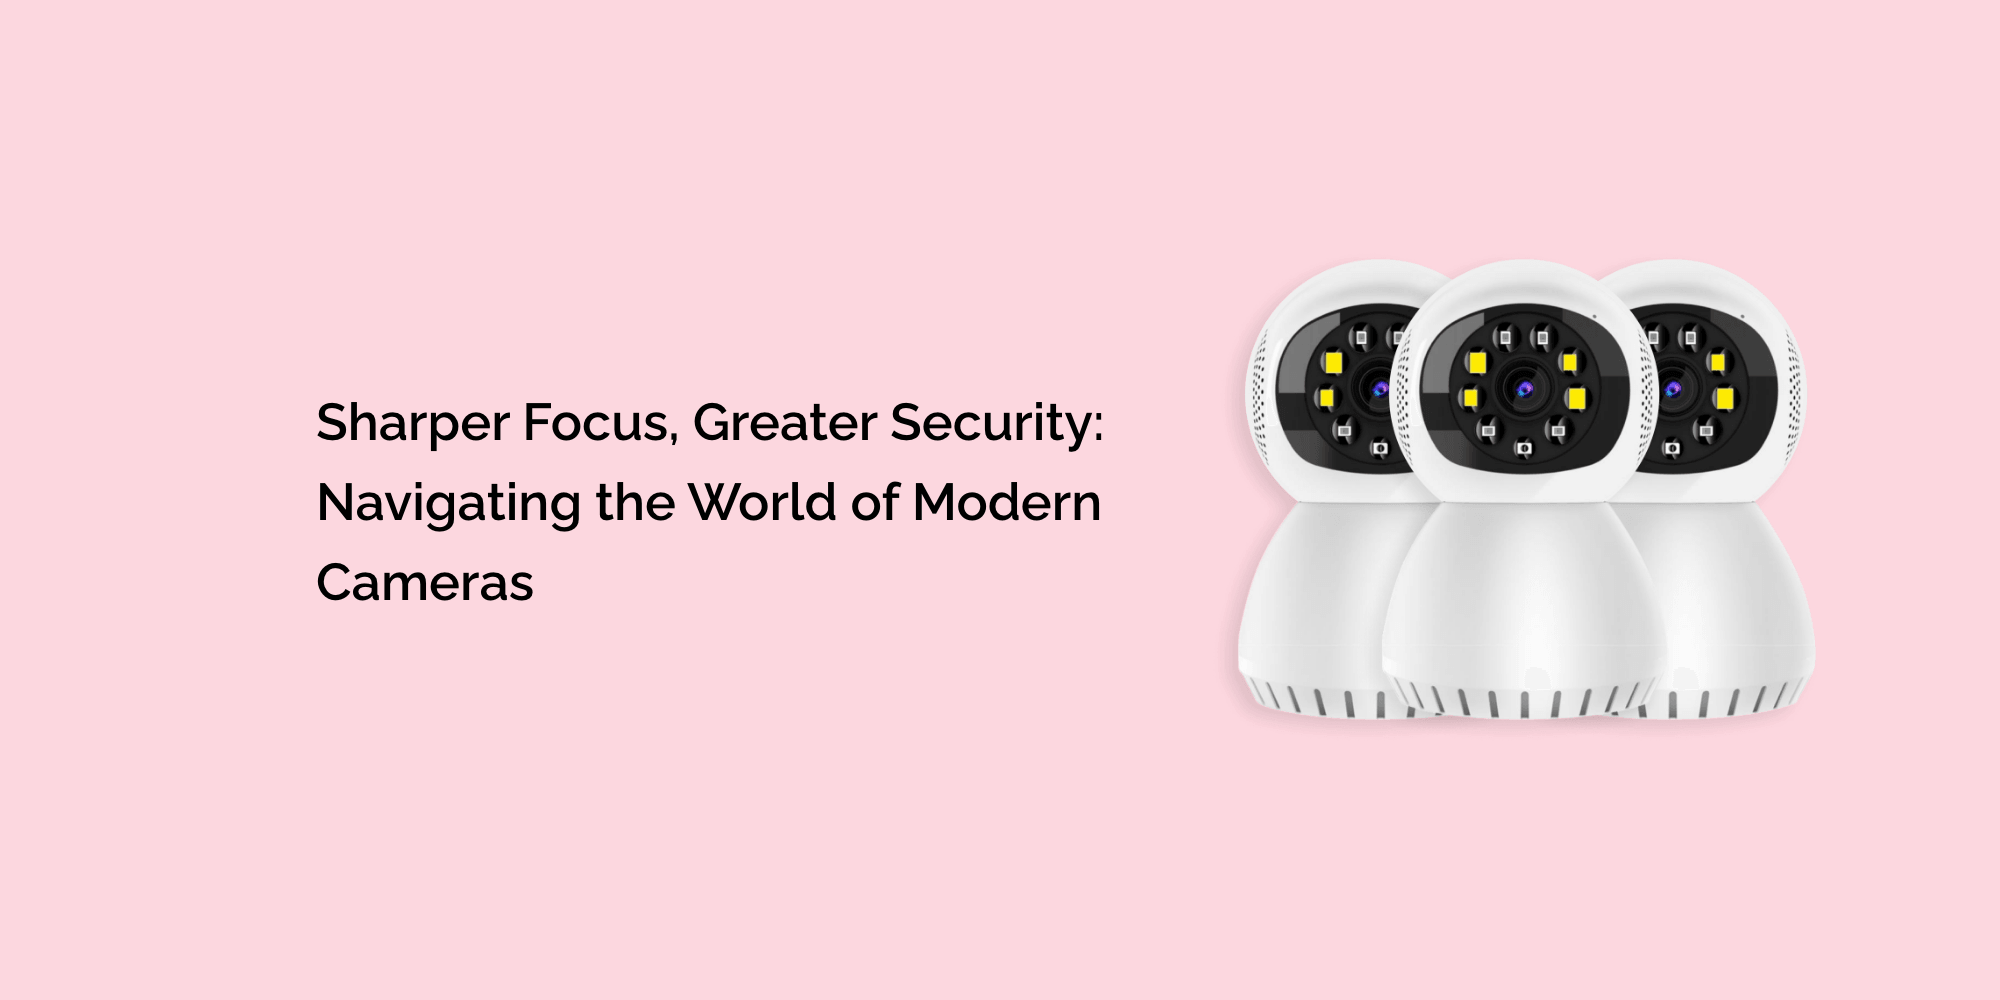 Sharper Focus, Greater Security: Navigating the World of Modern Cameras